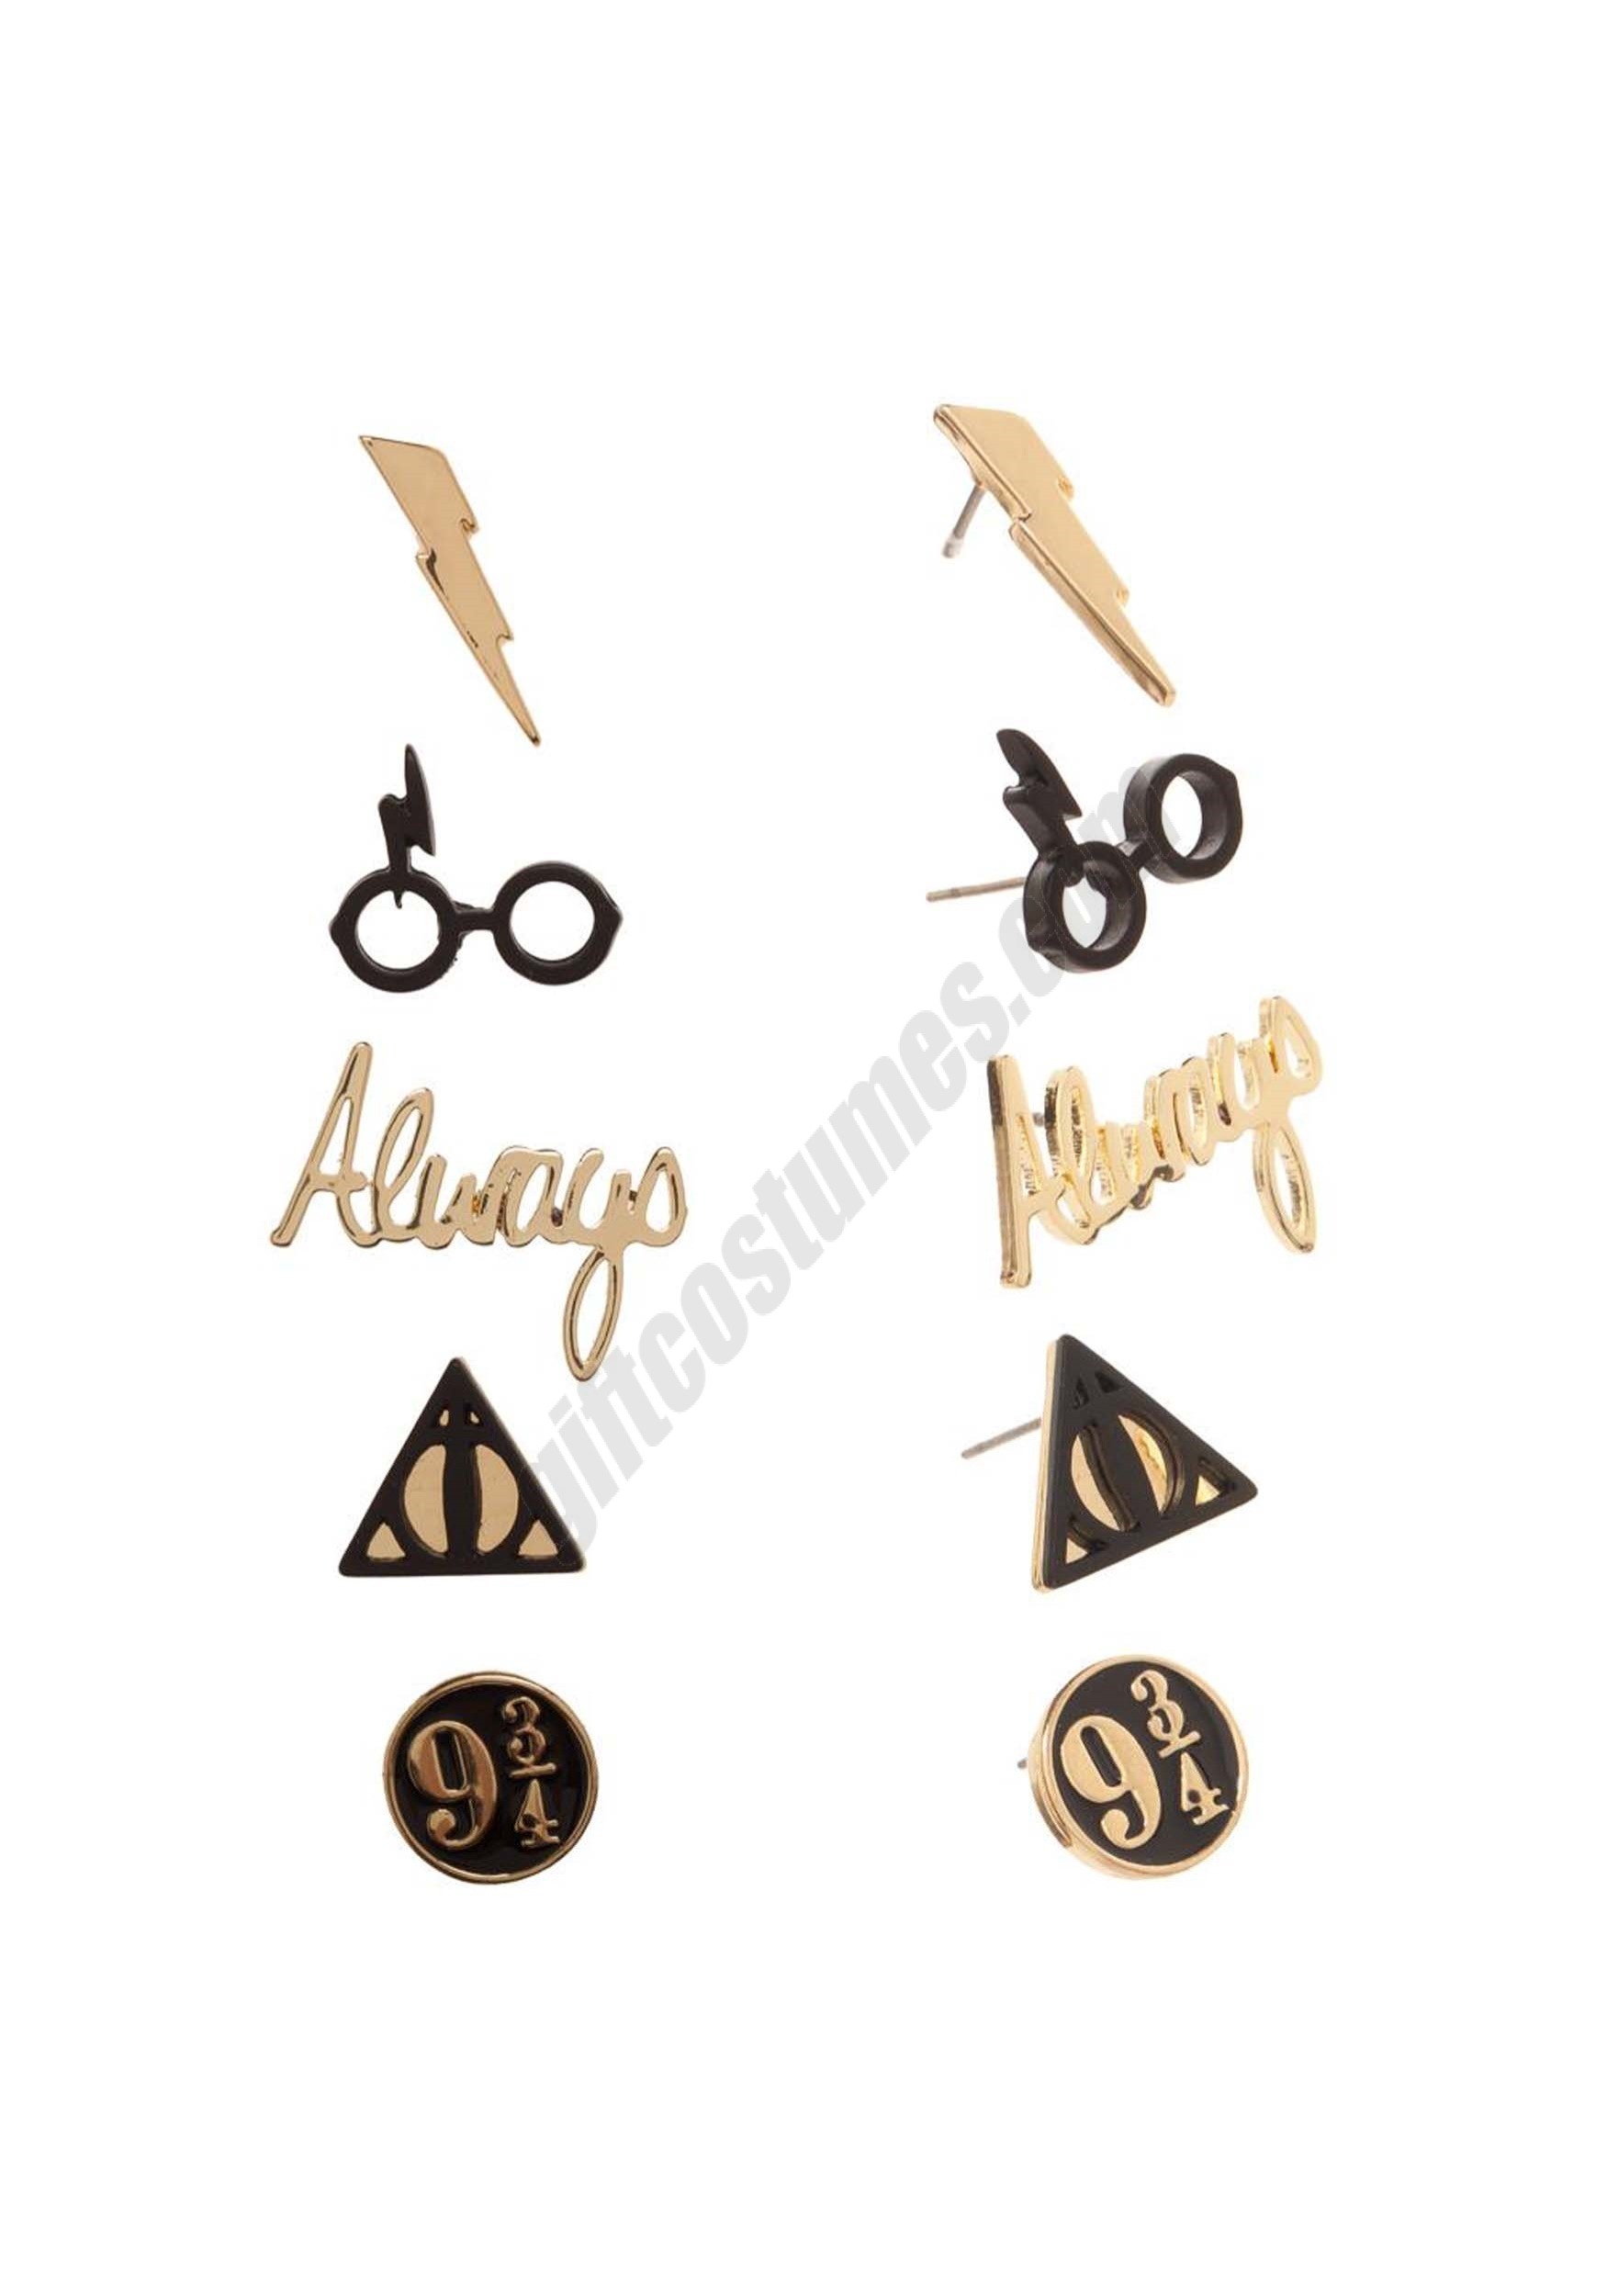 Harry Potter 5-pk Earring Set Promotions - Harry Potter 5-pk Earring Set Promotions